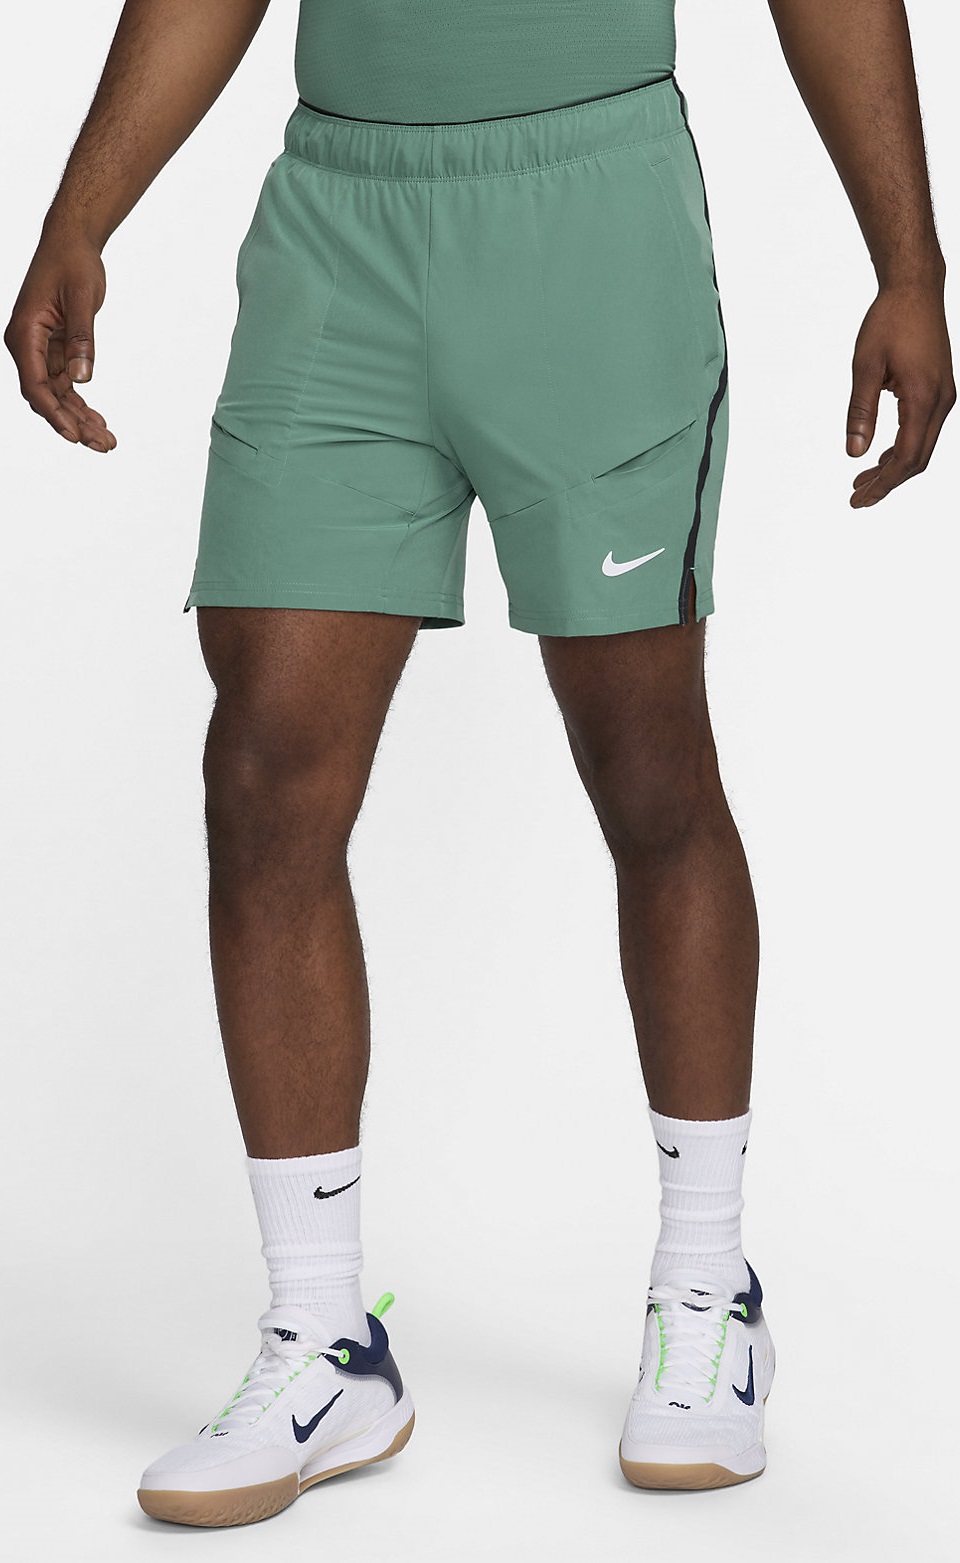 NIKE - Nike Court 7 inch Advantage Short